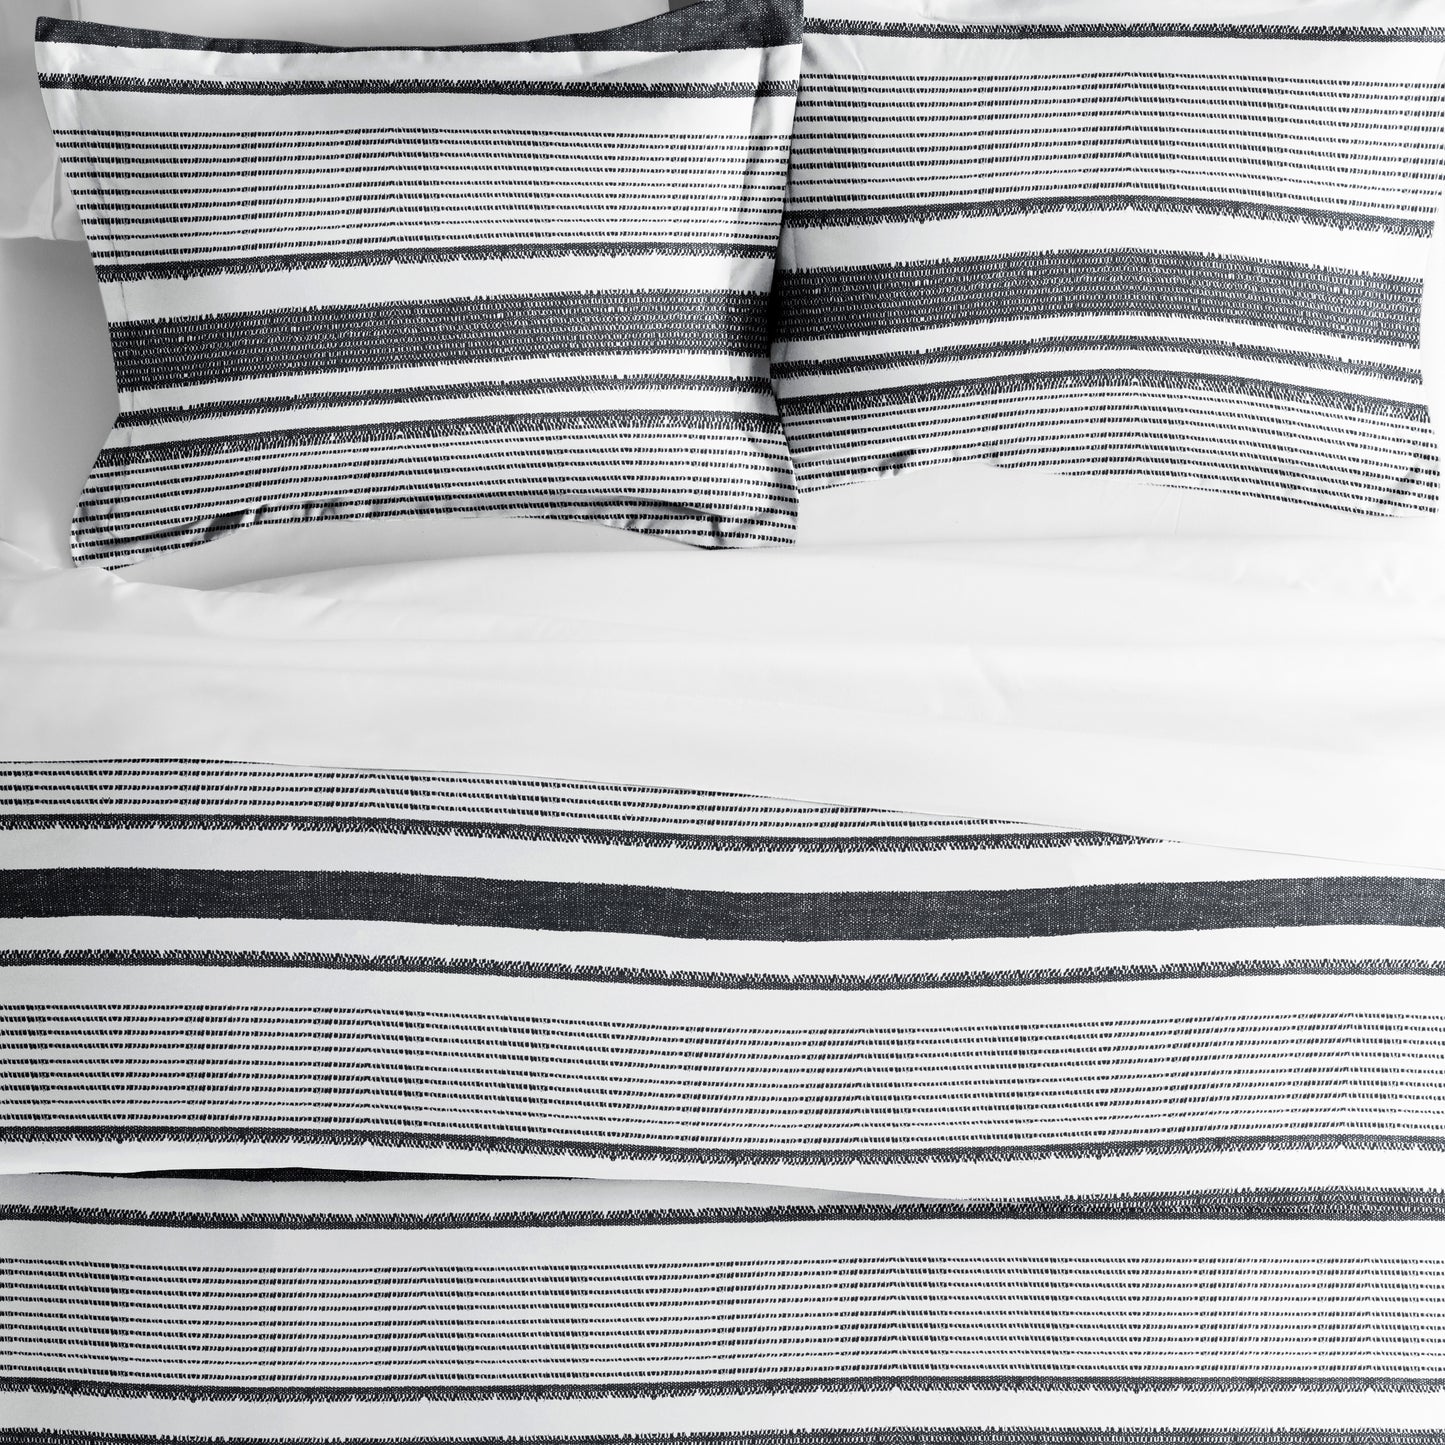 Duvet Cover Set in Striped Patterns